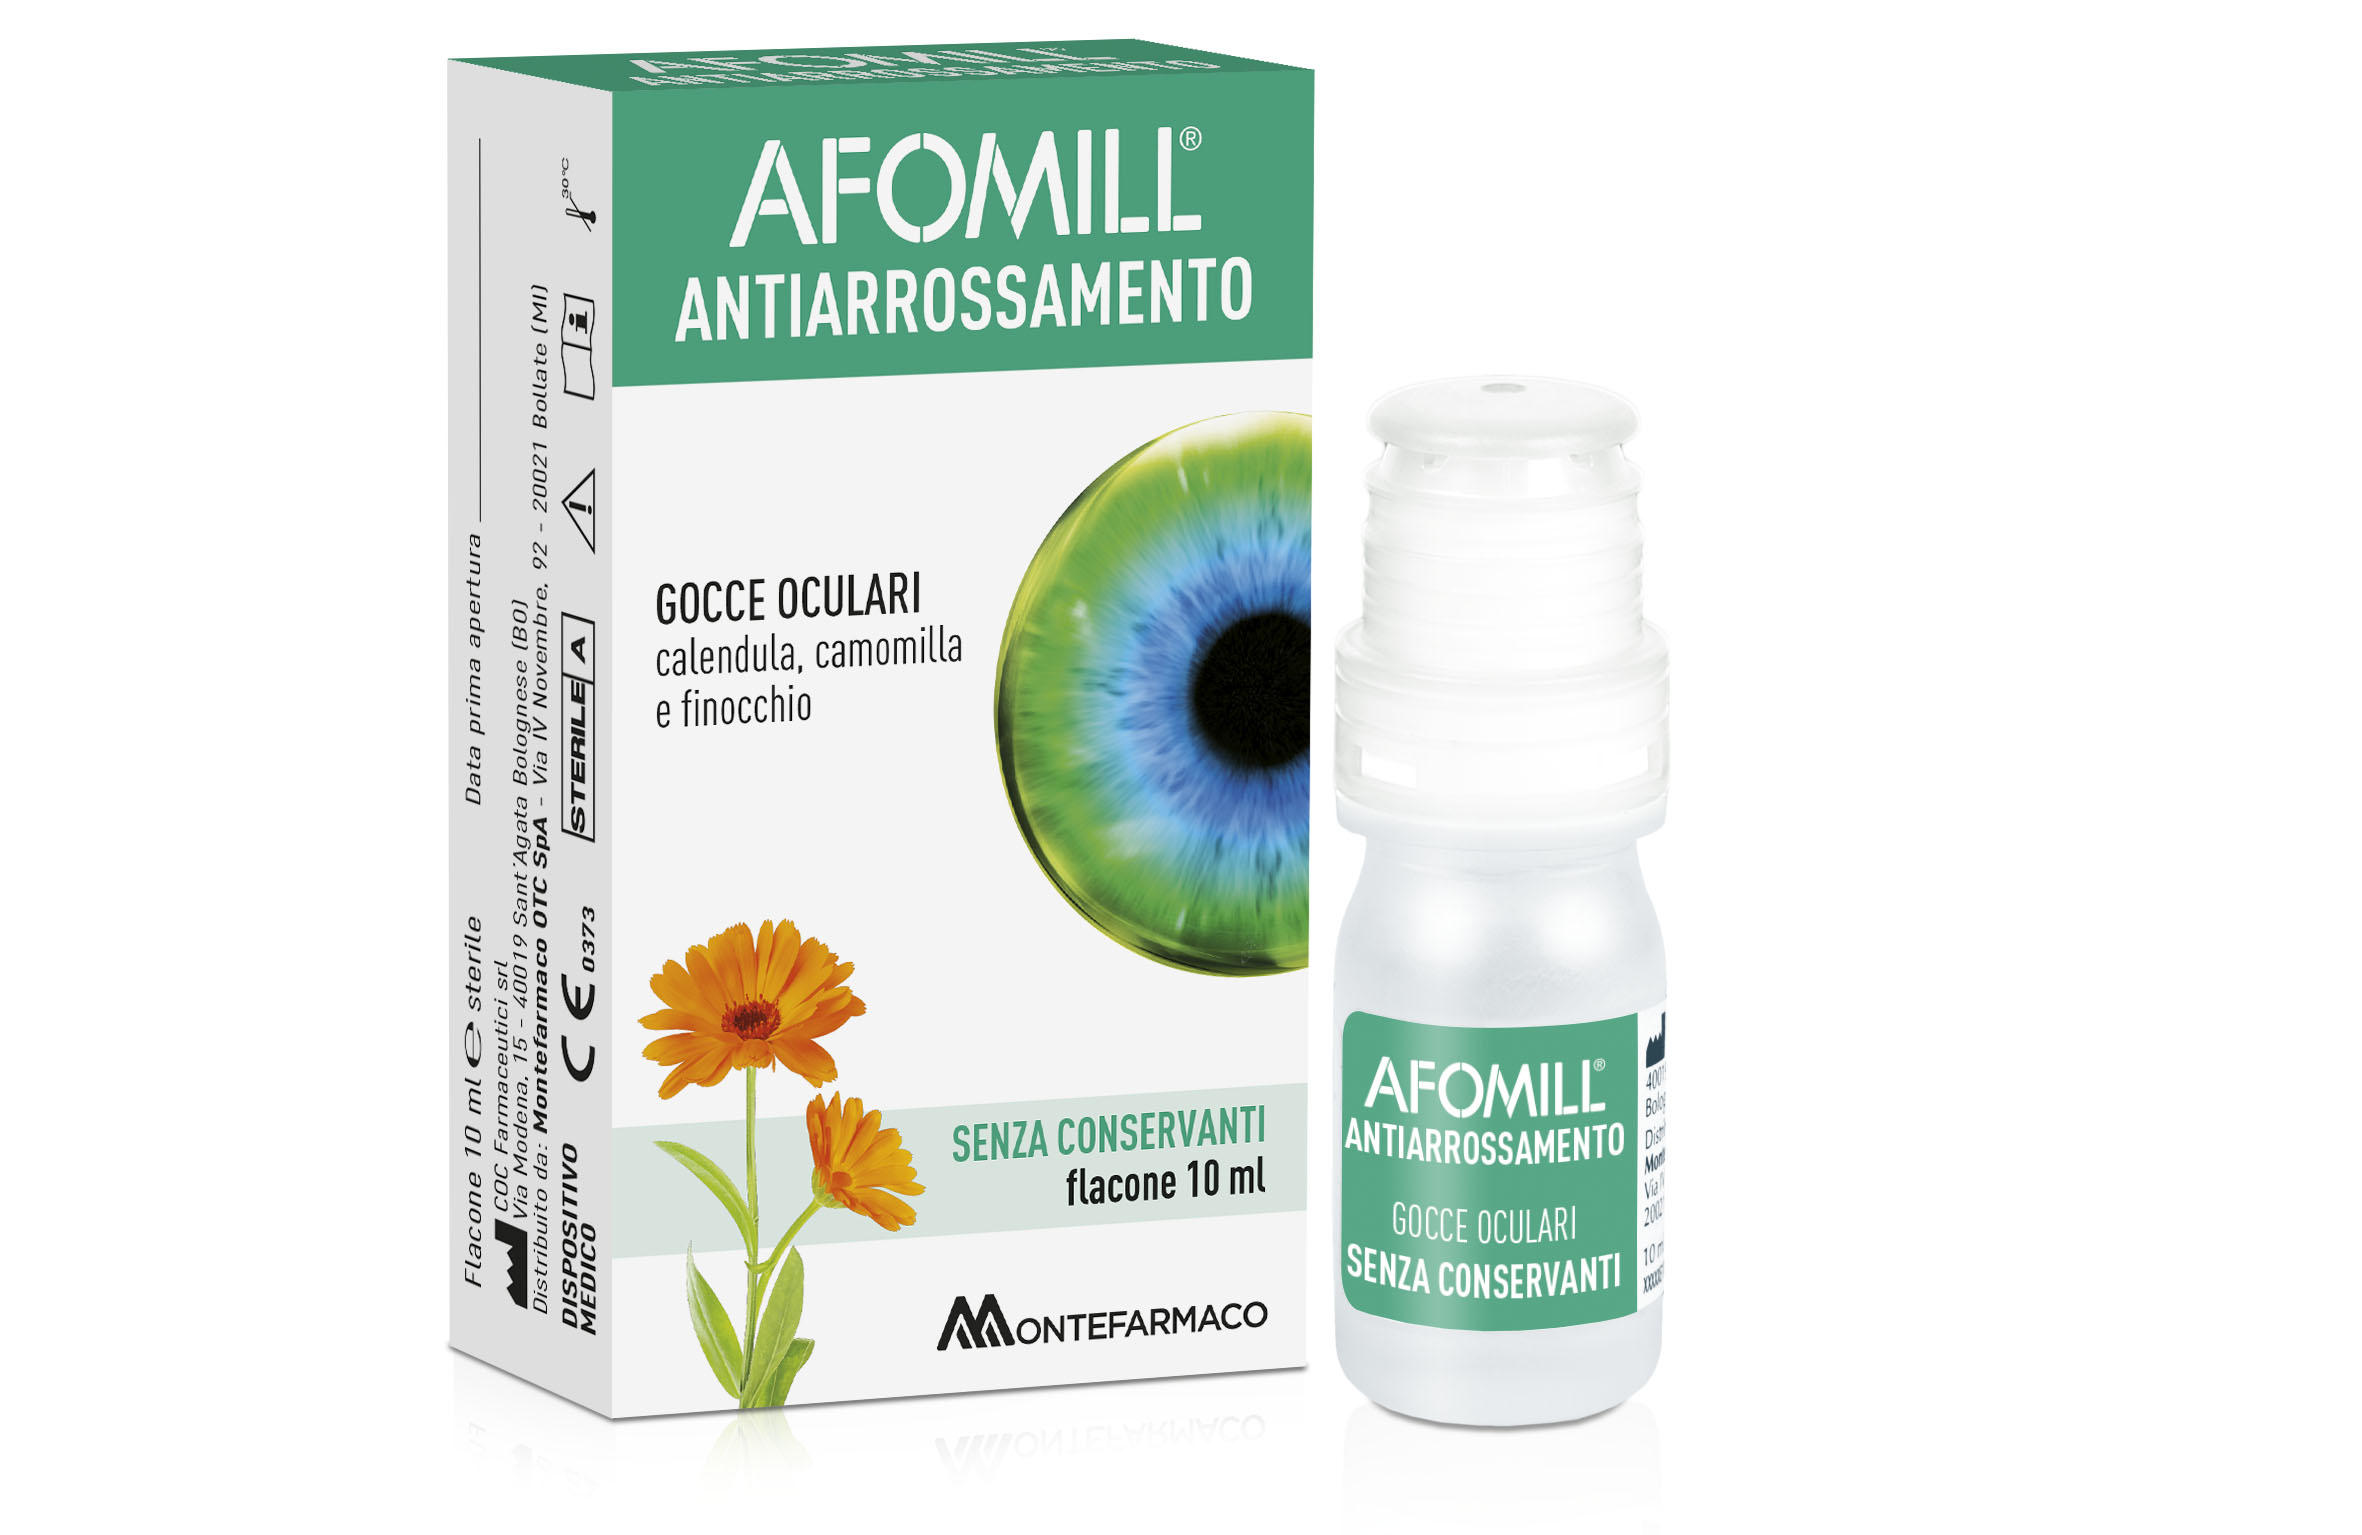 Afomill(R) Antiarrossamento MONTEFARMACO 10ml